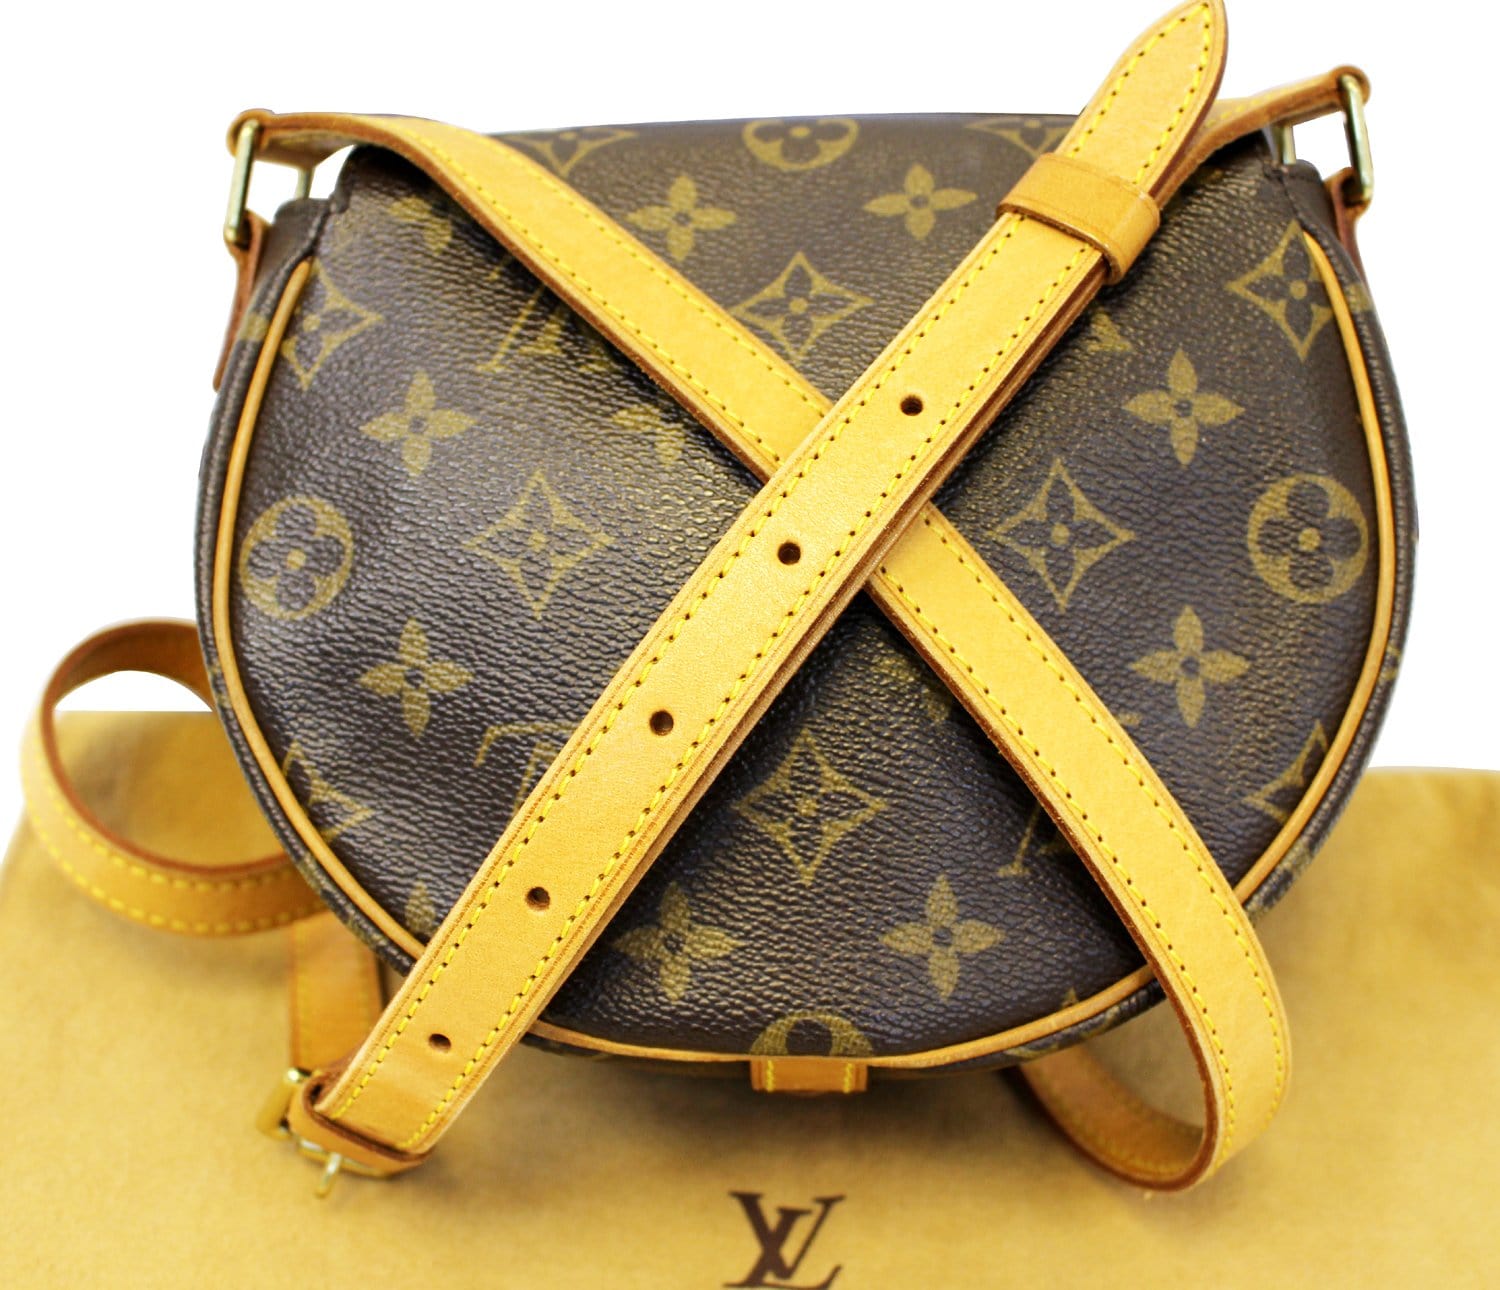 Authentic Louis Vuitton Vernis Crossbody~Handbag for Sale in